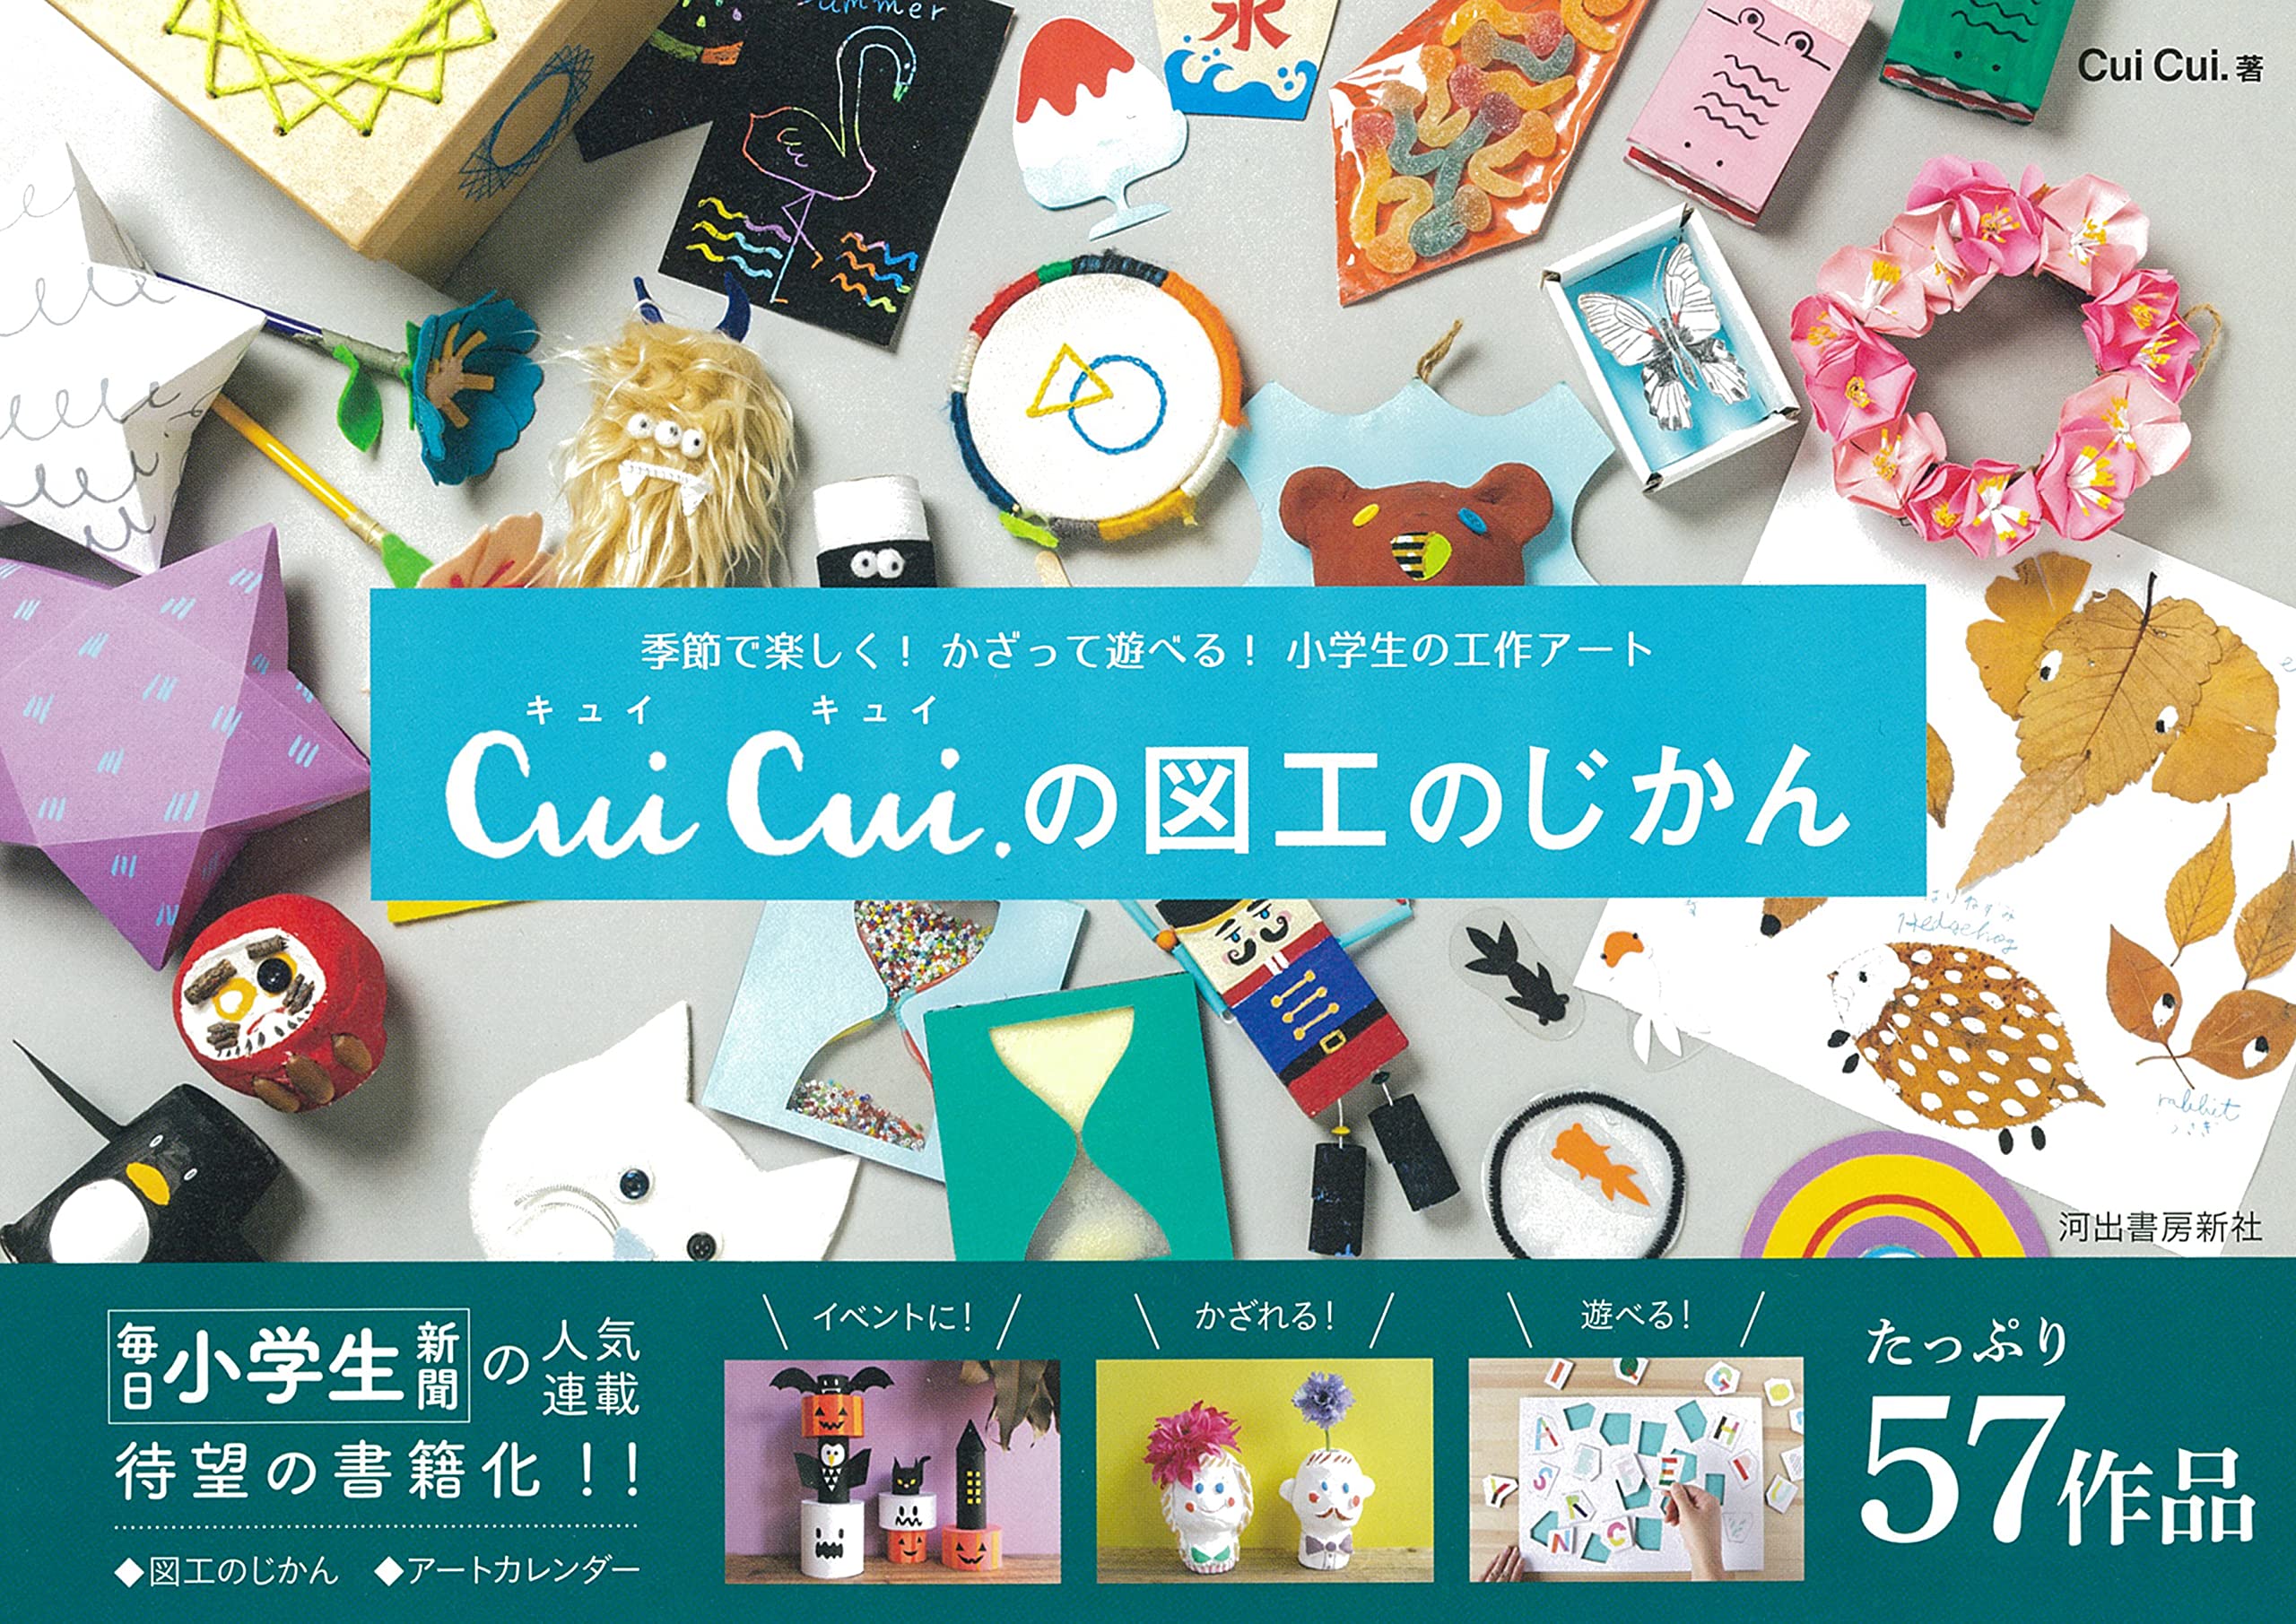 ●『Cui Cui.の図工のじかん』で作品づくりに挑戦